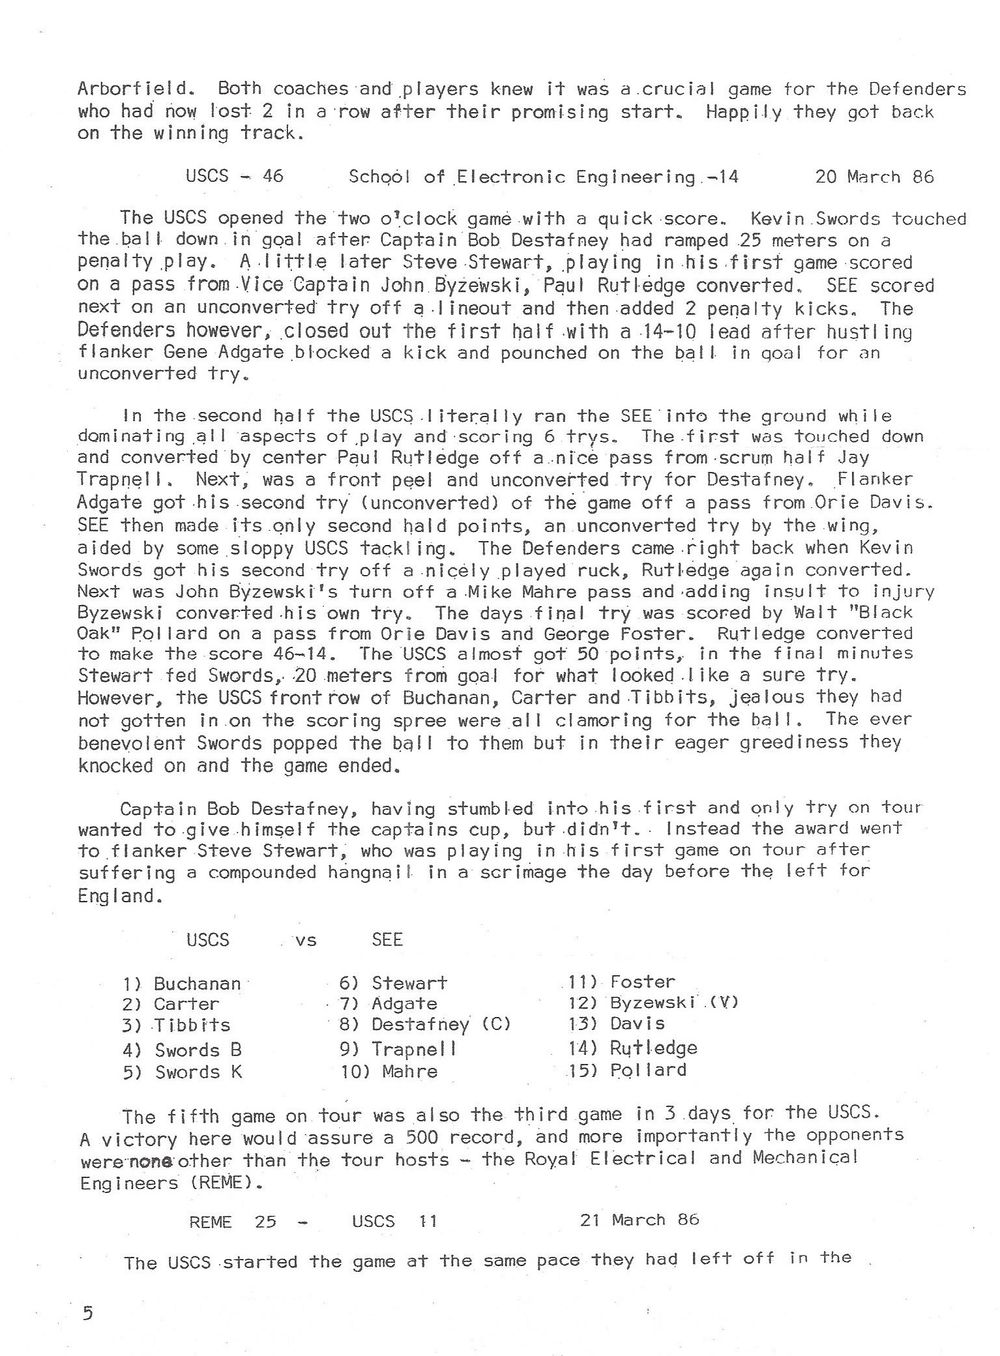 1986 CS Tour Report 5.jpg